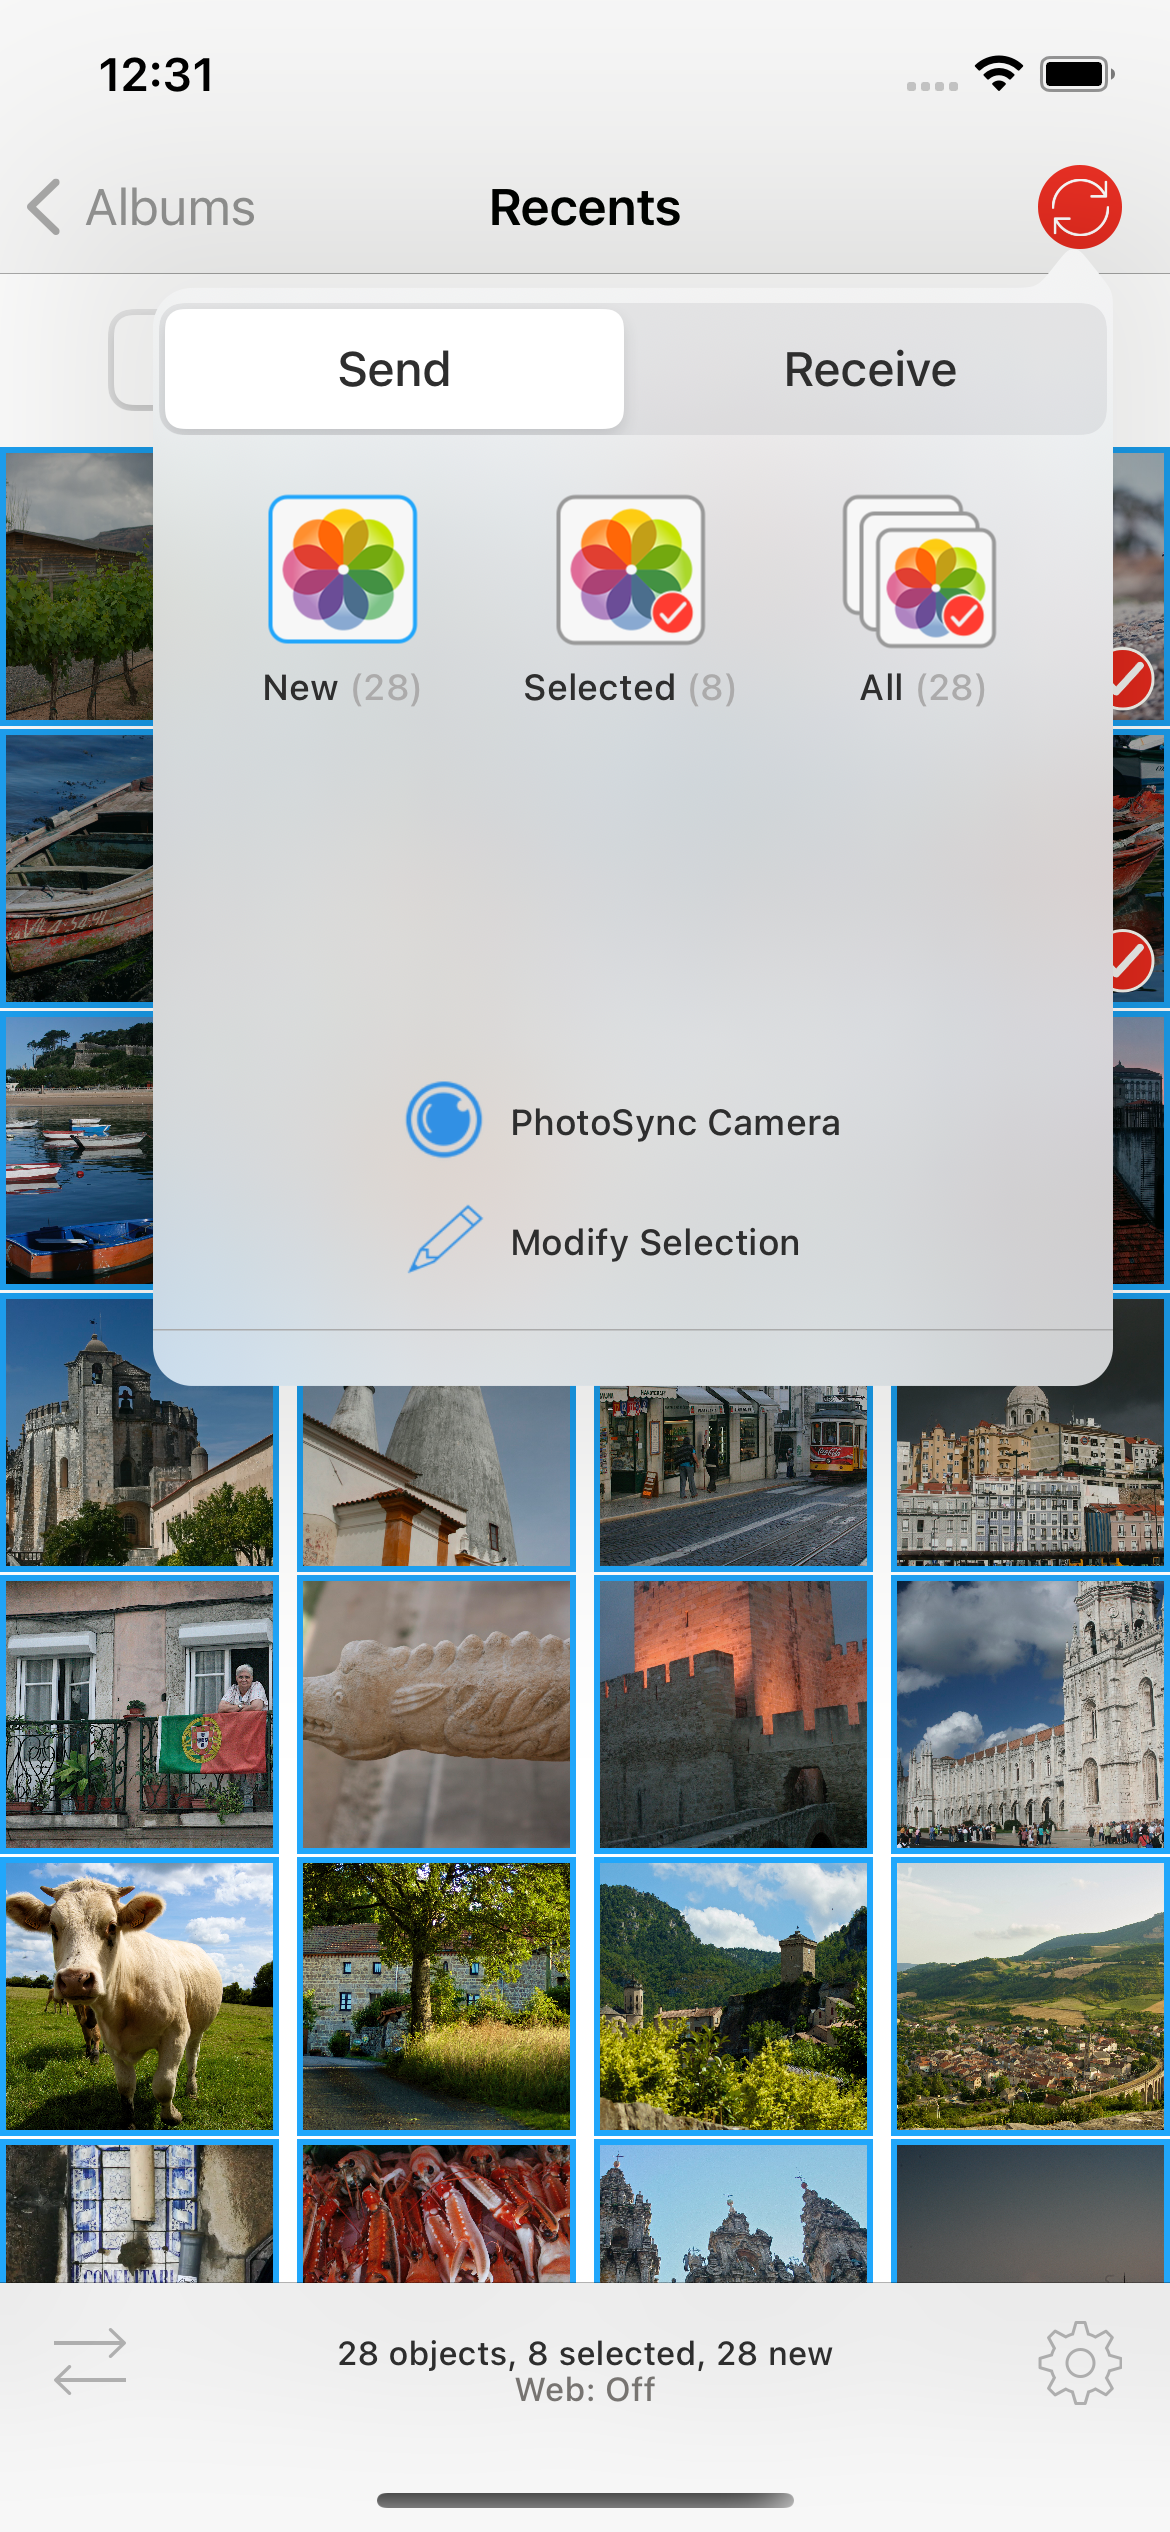 Sending options in PhotoSync